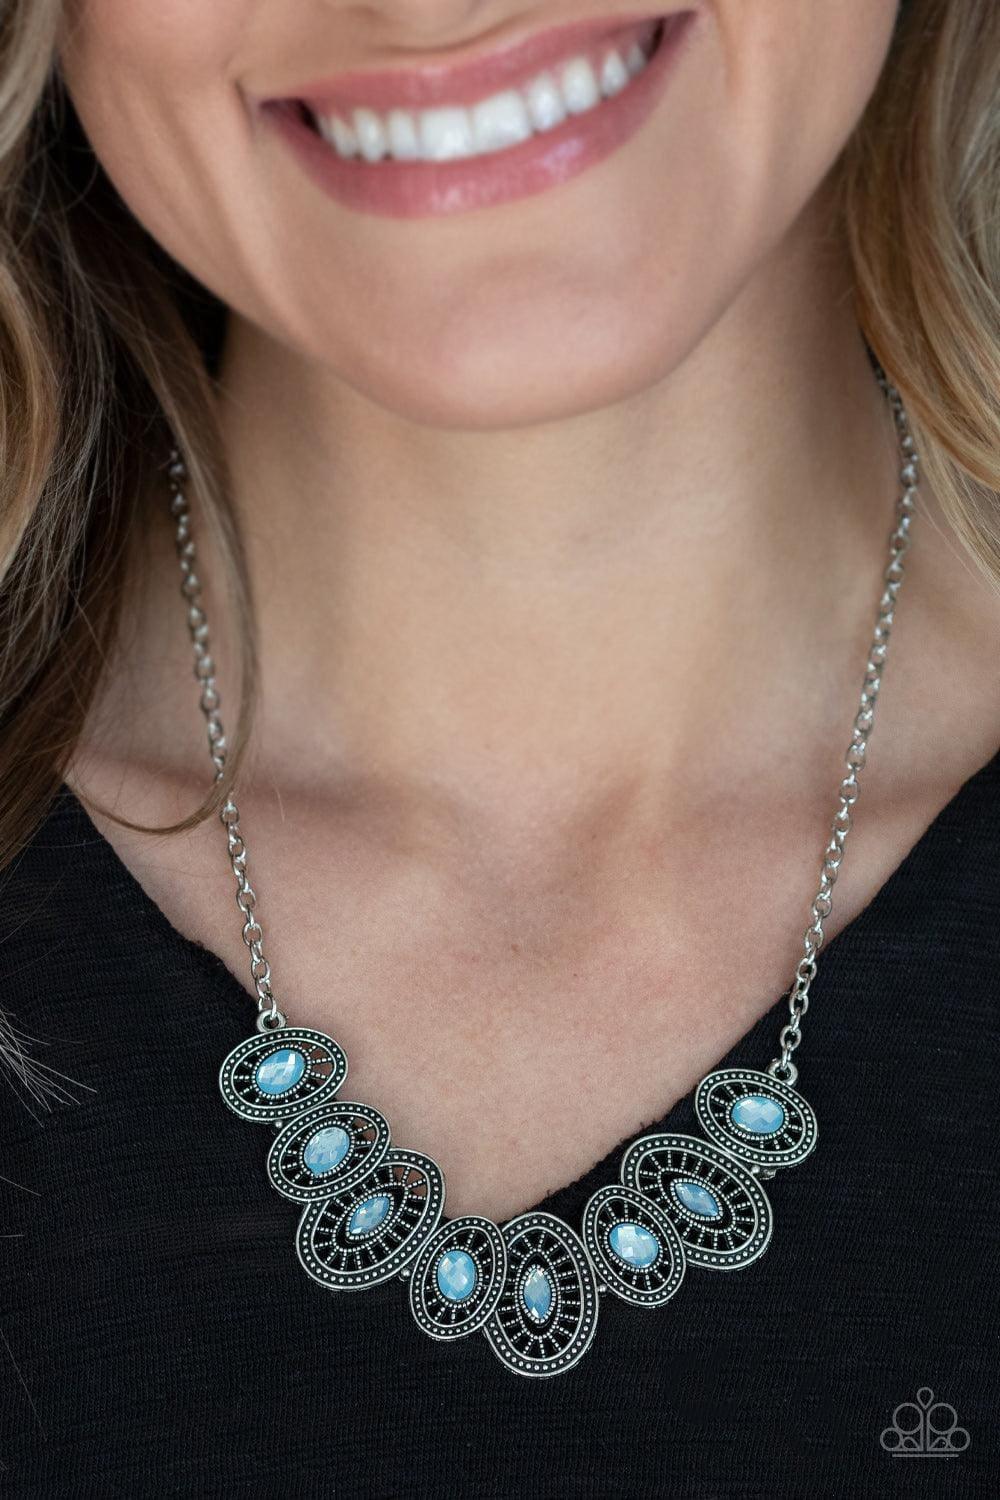 Paparazzi Accessories - Trinket Trove - Blue Necklace - Bling by JessieK